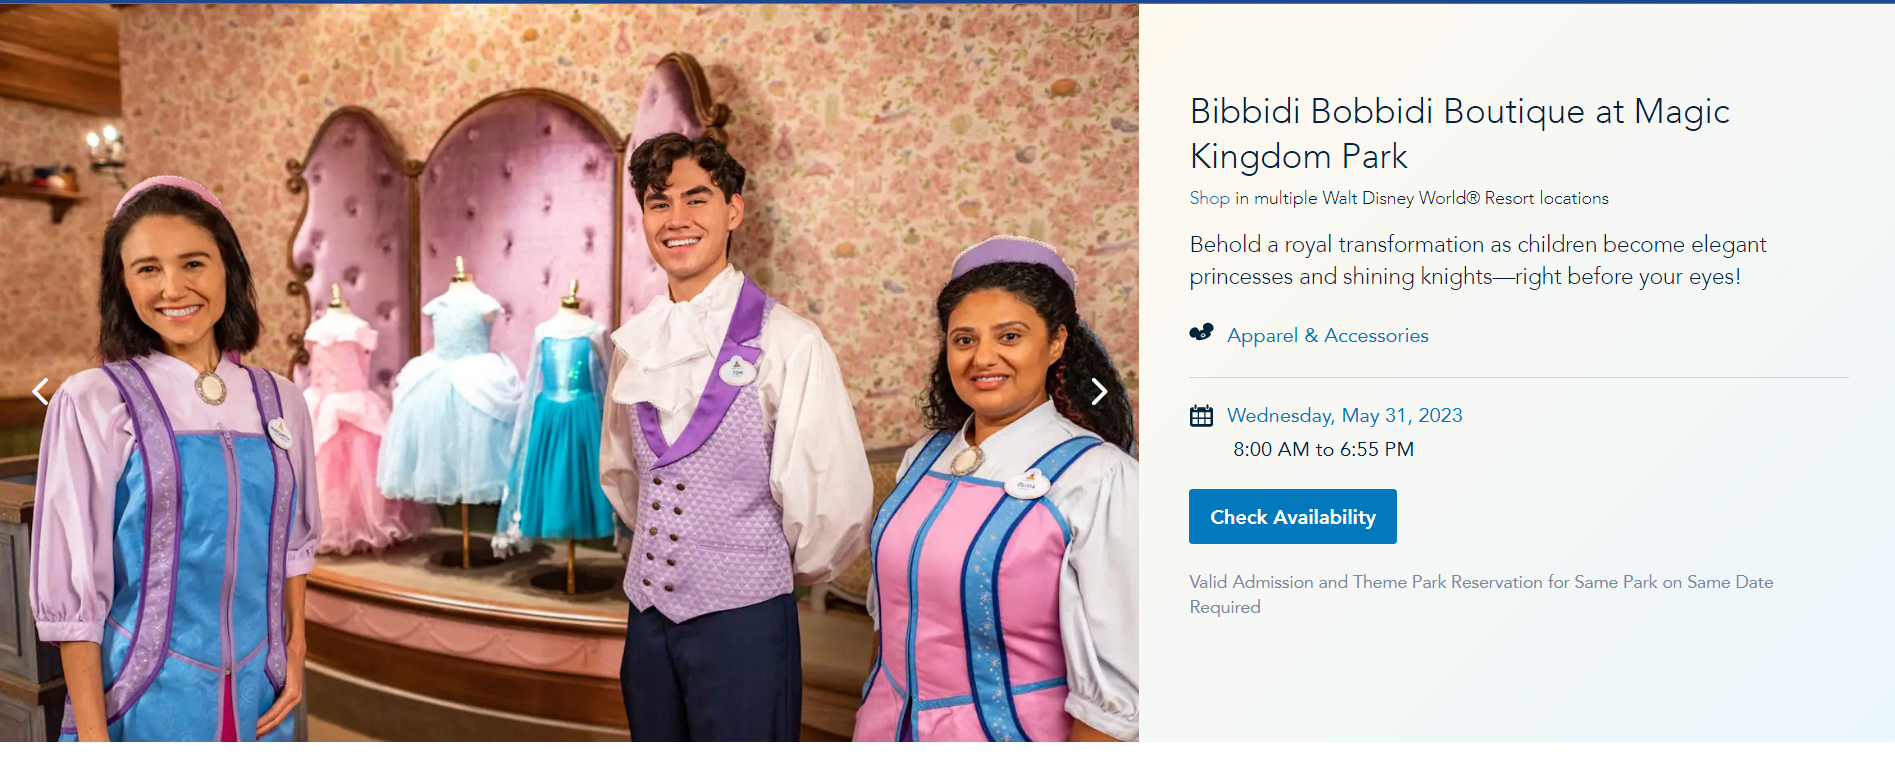 Disneyland Cast Member Appears To Dress In Drag To Greet Children